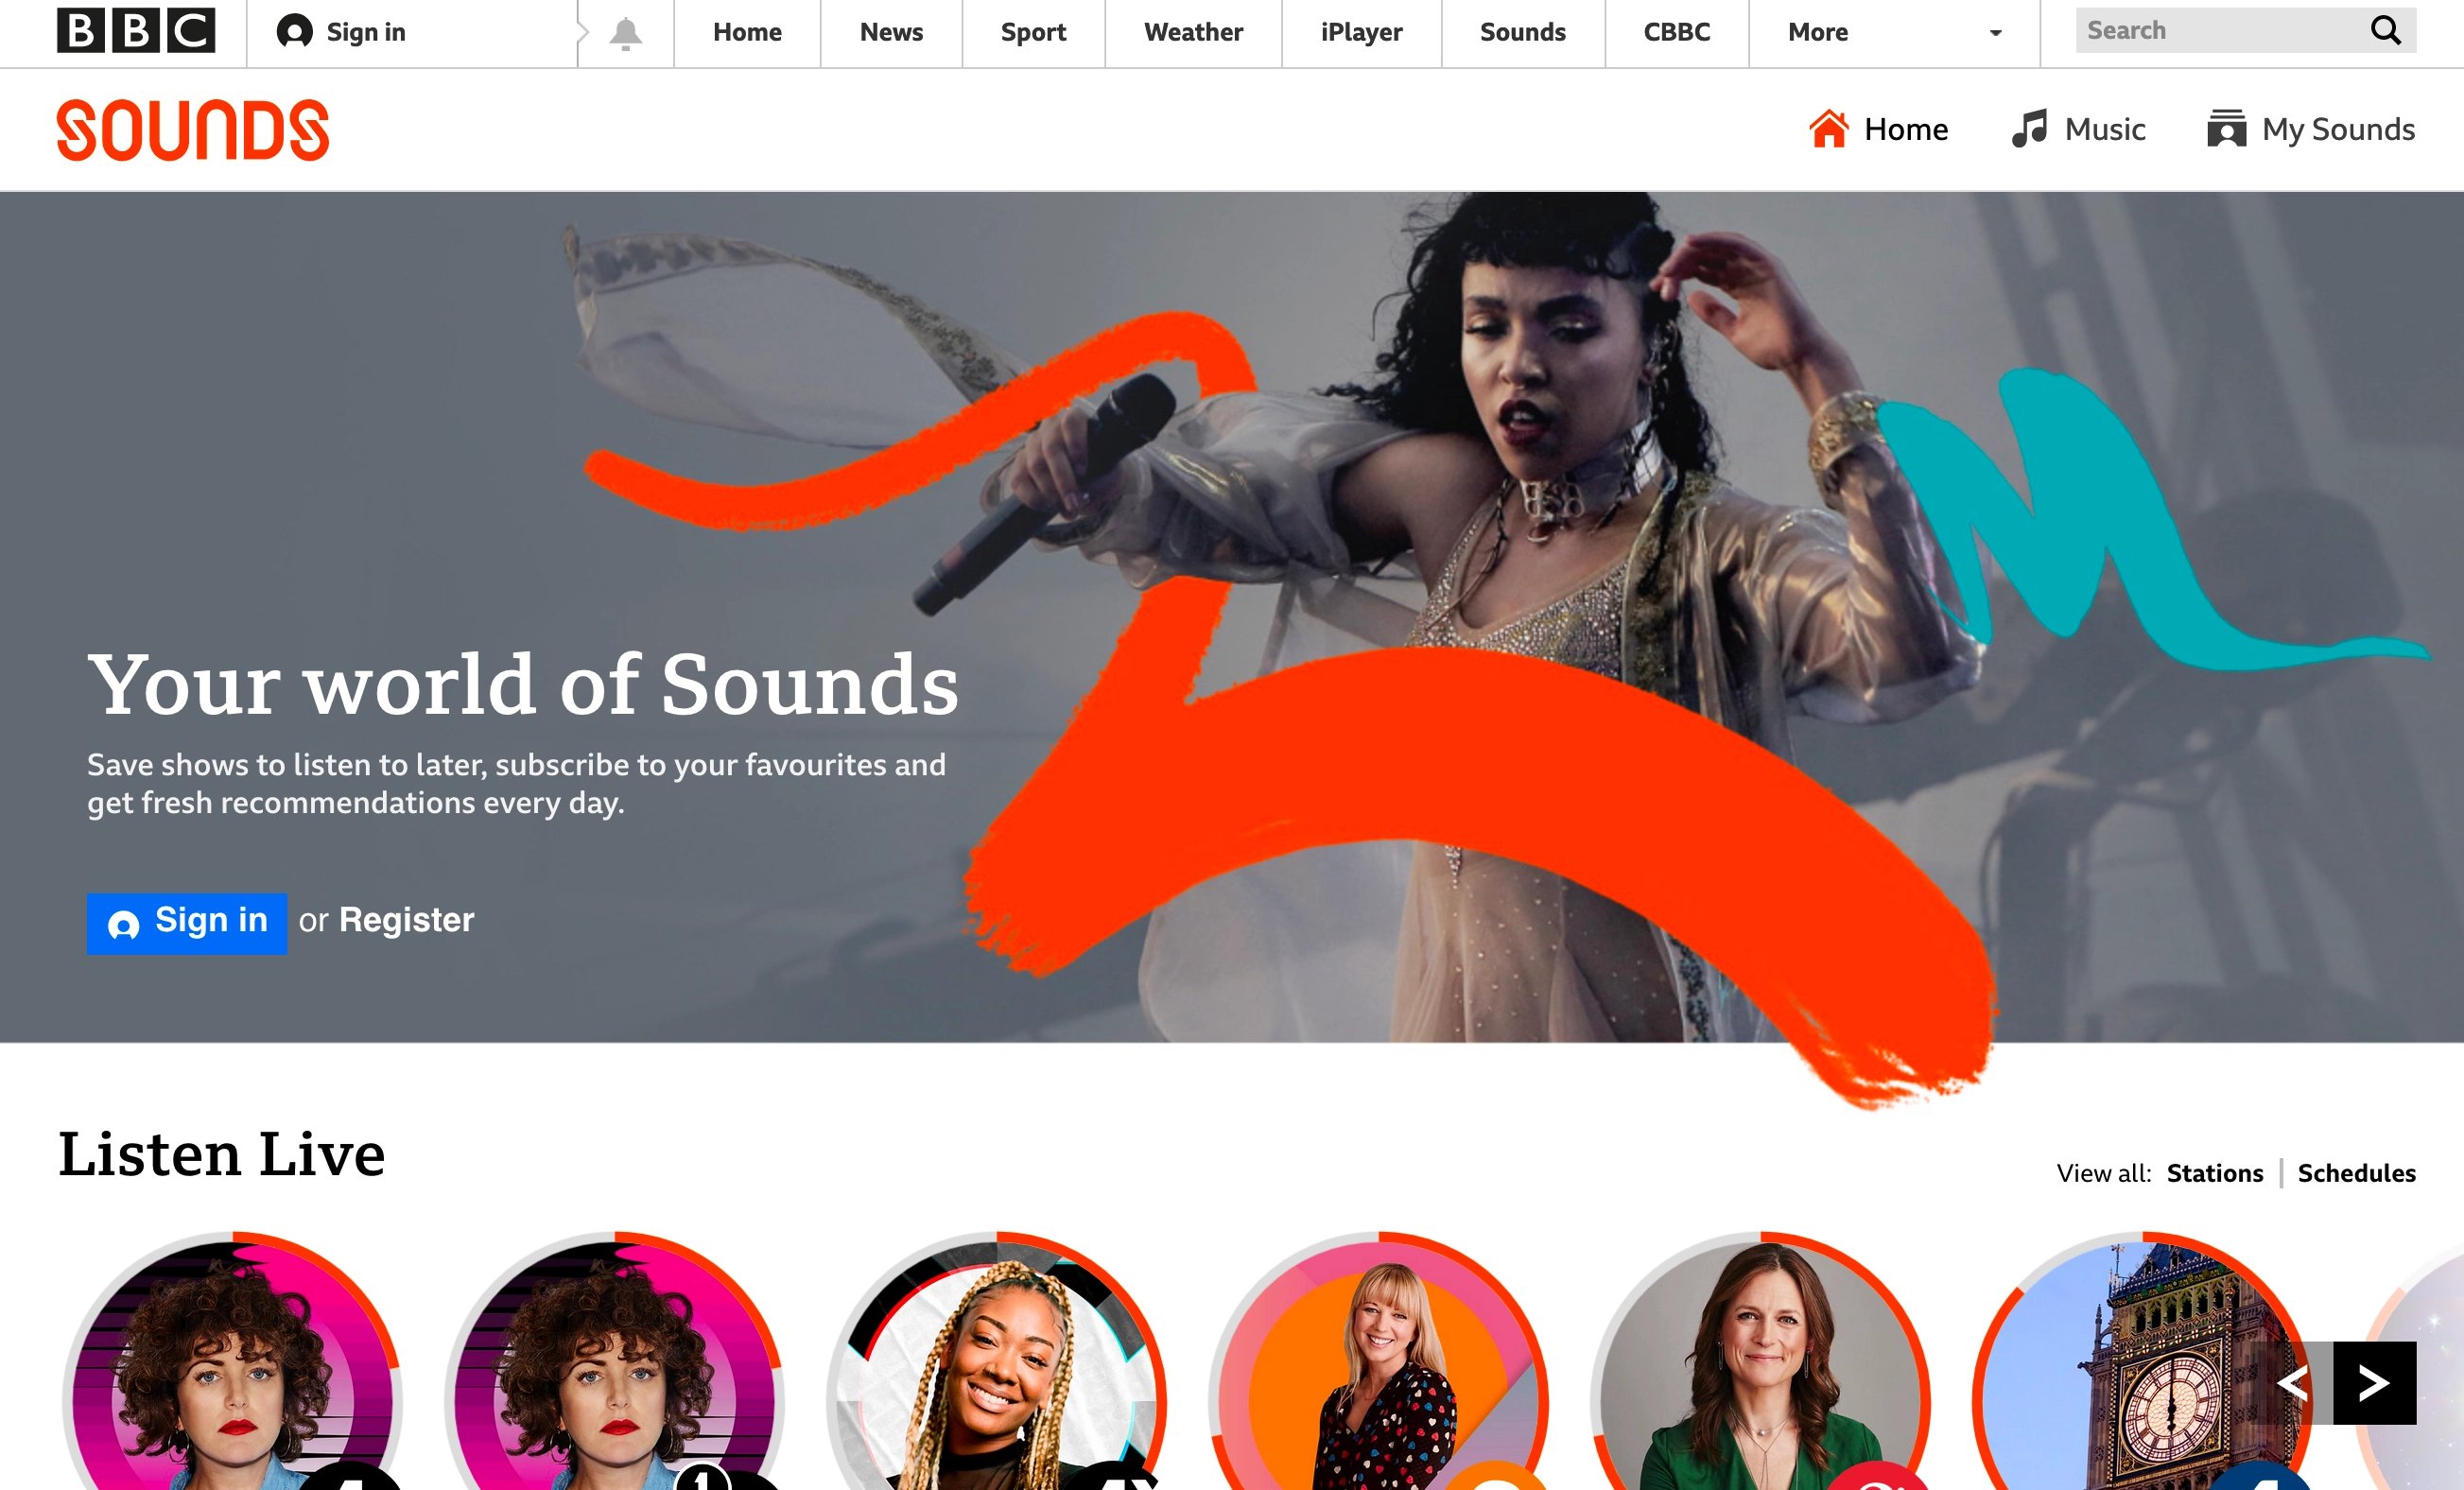 A screenshot of the BBC Sounds website